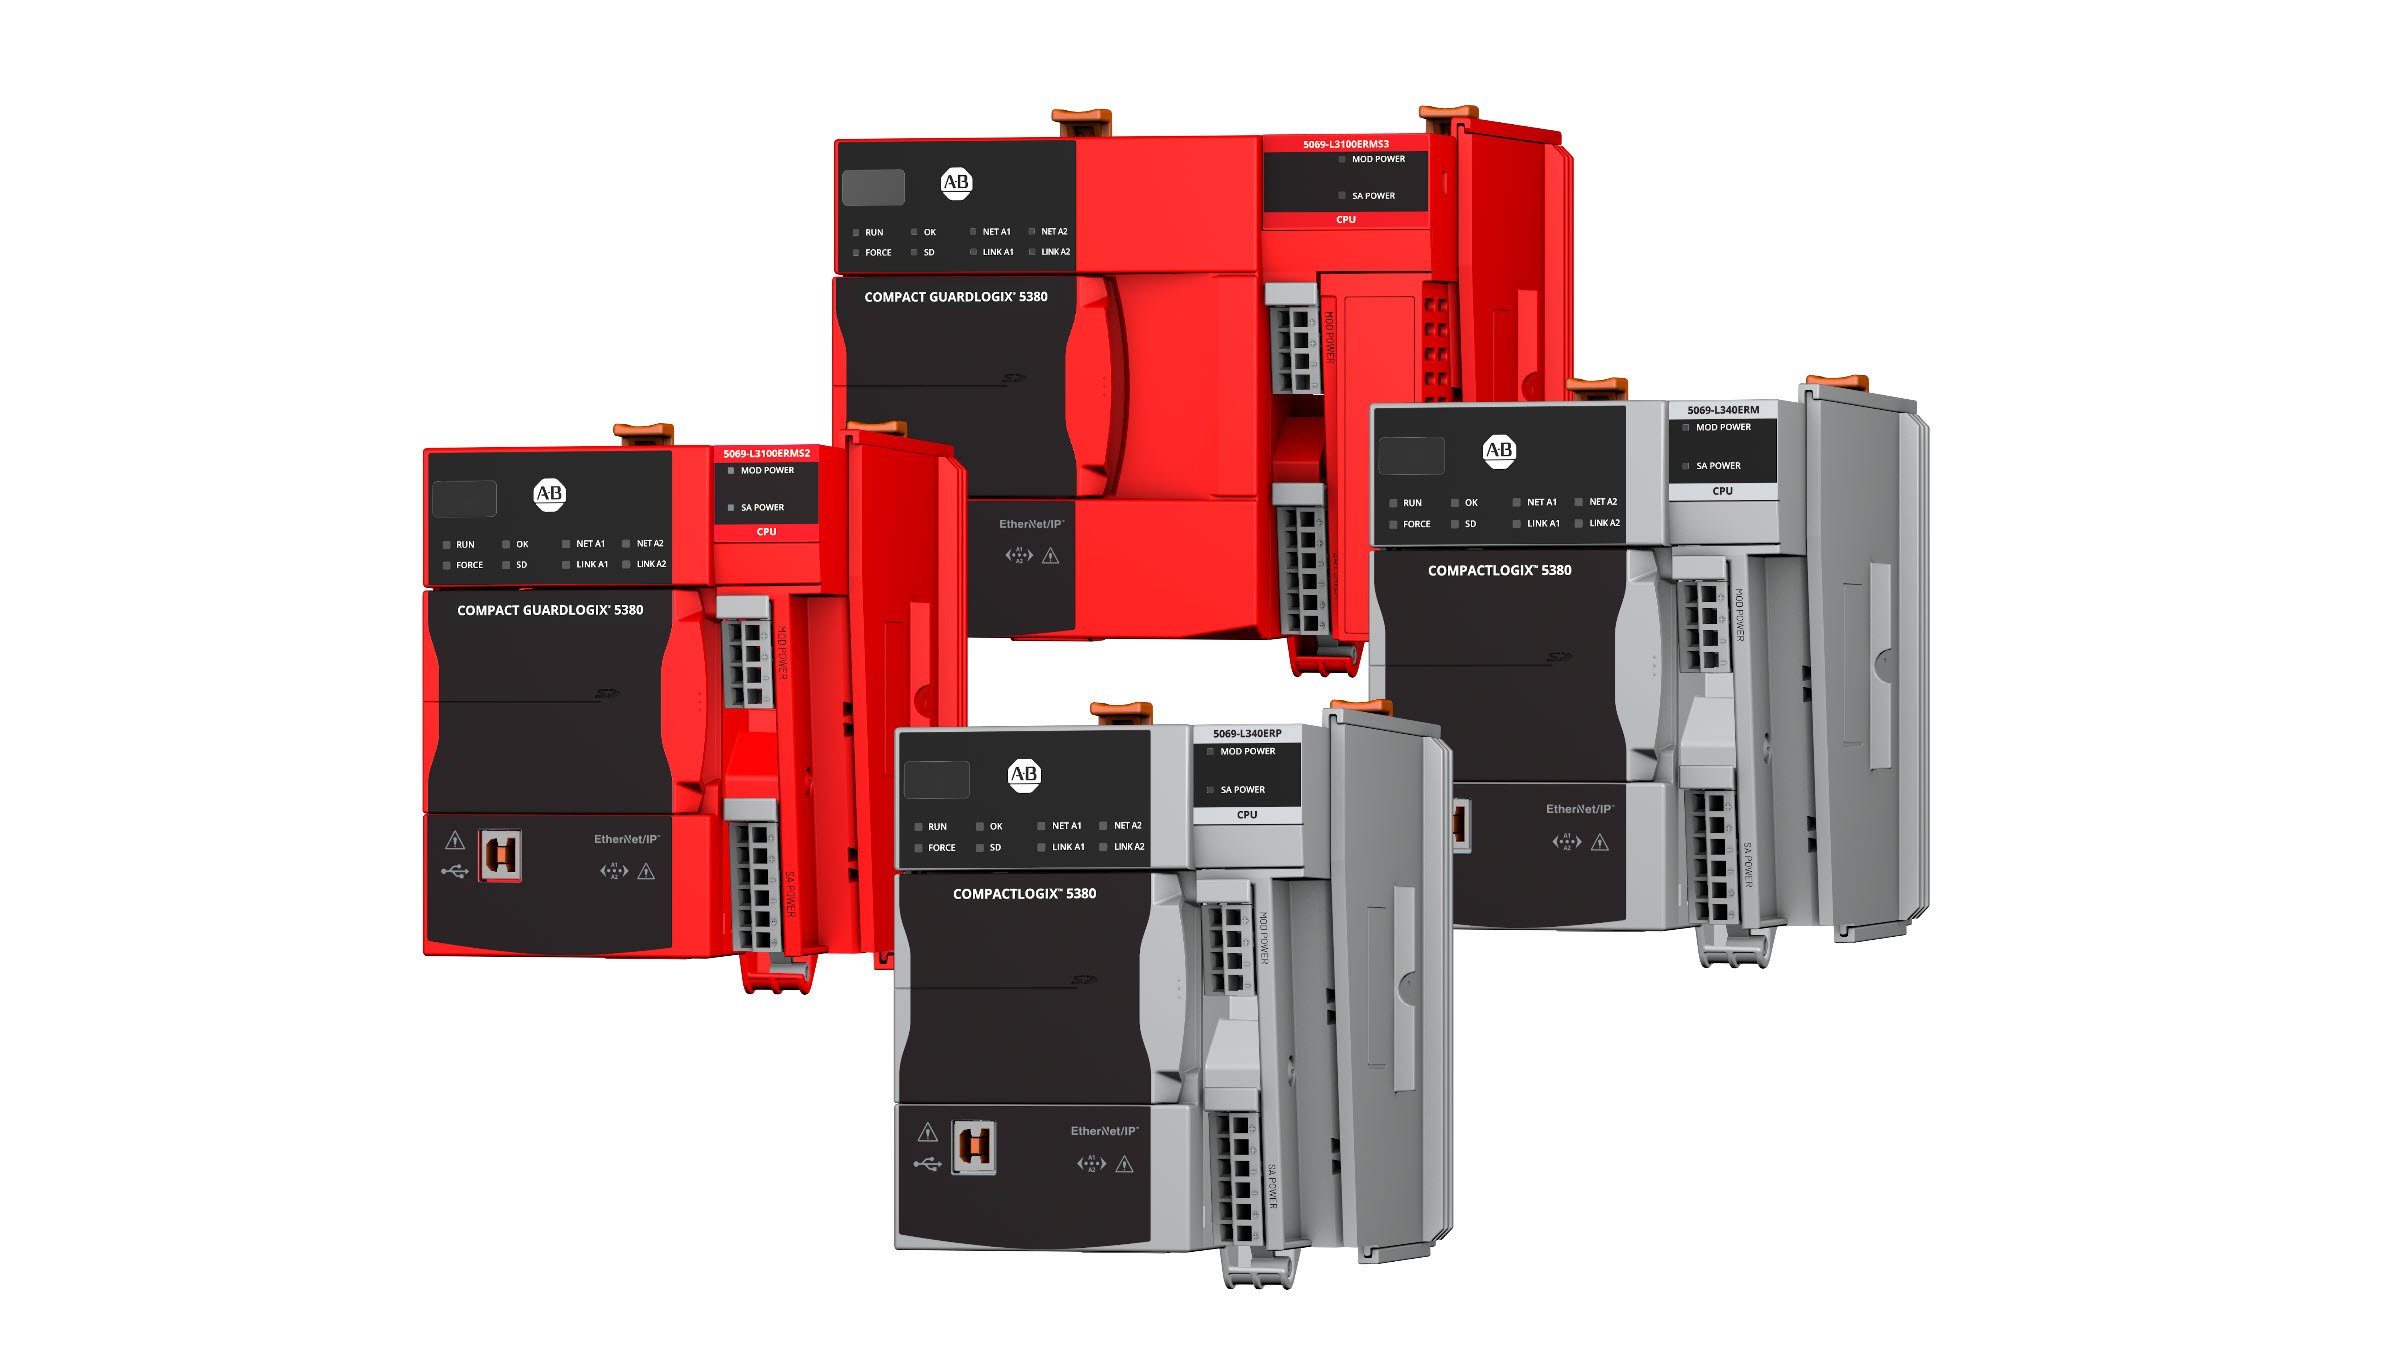 Una raccolta di controllori Compact GuardLogix 5380 e CompactLogix 5380 Cataloghi 5069-L3100ERMS3, 5069-L3100ERMS2, 5069-L340ERM e 5069-L340ERP.